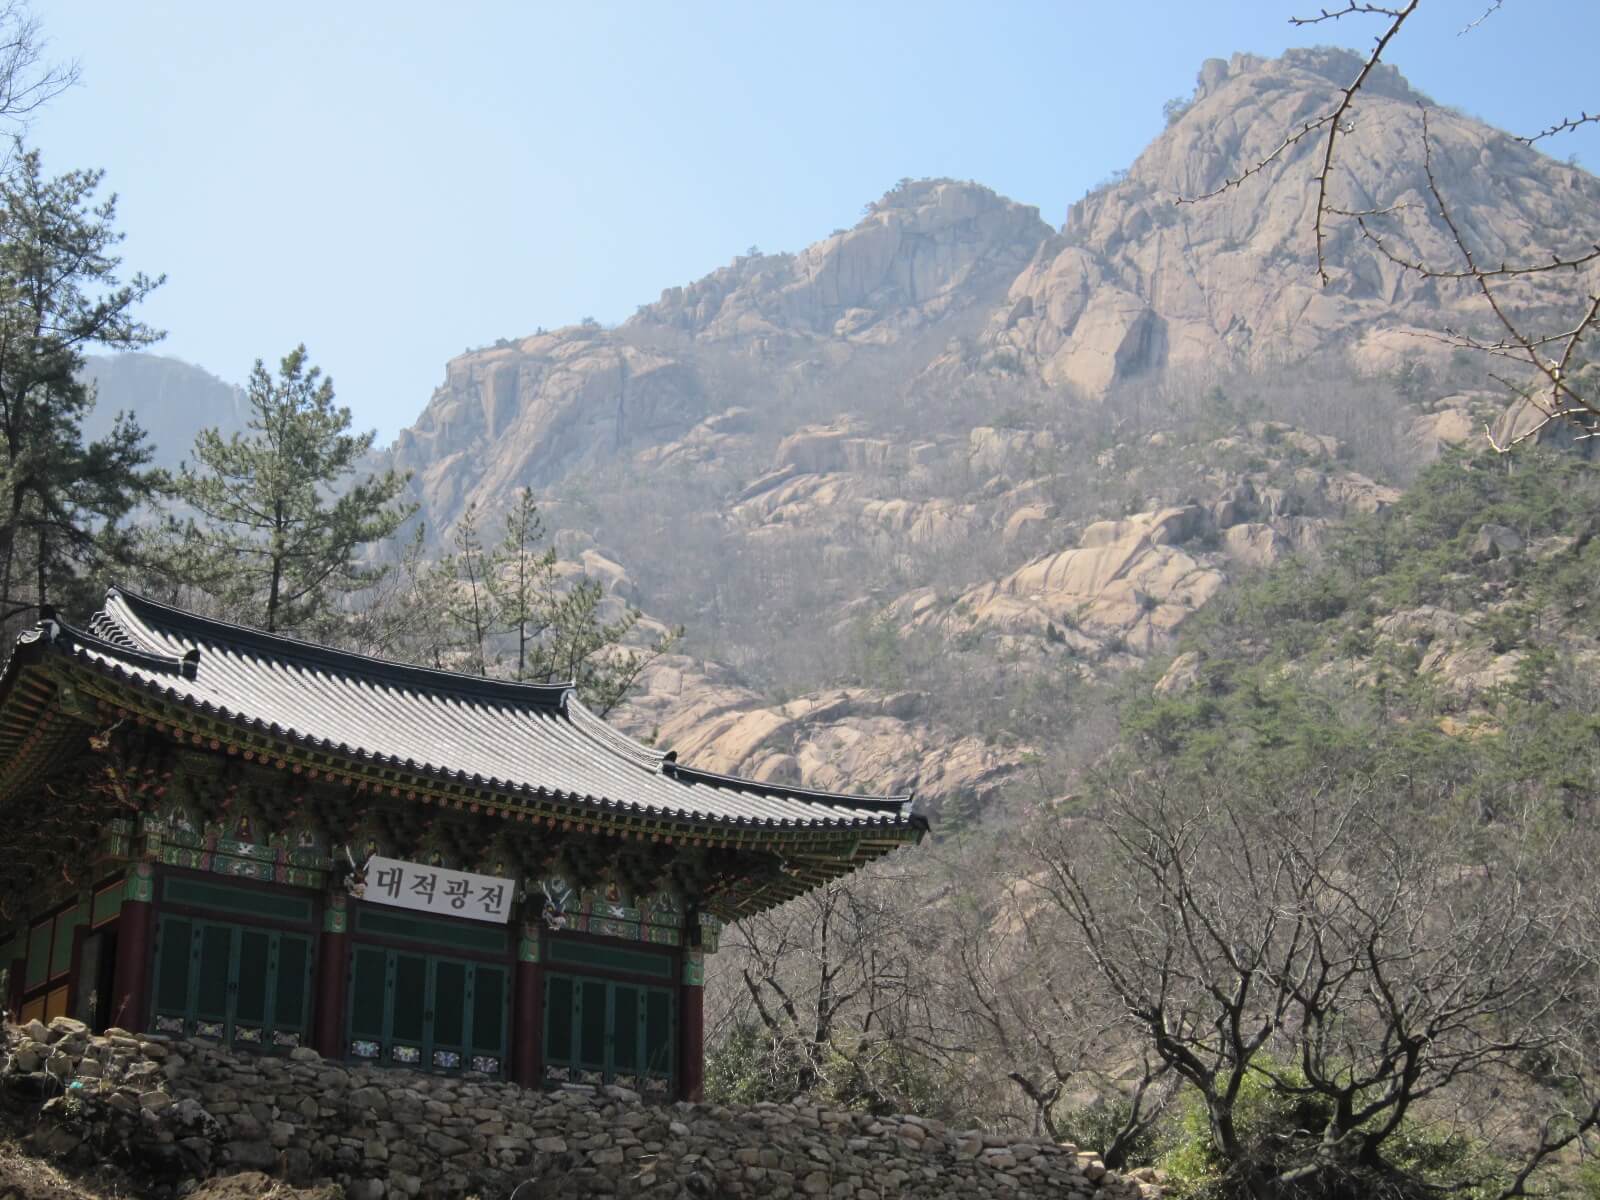 Mountain view in South Korea